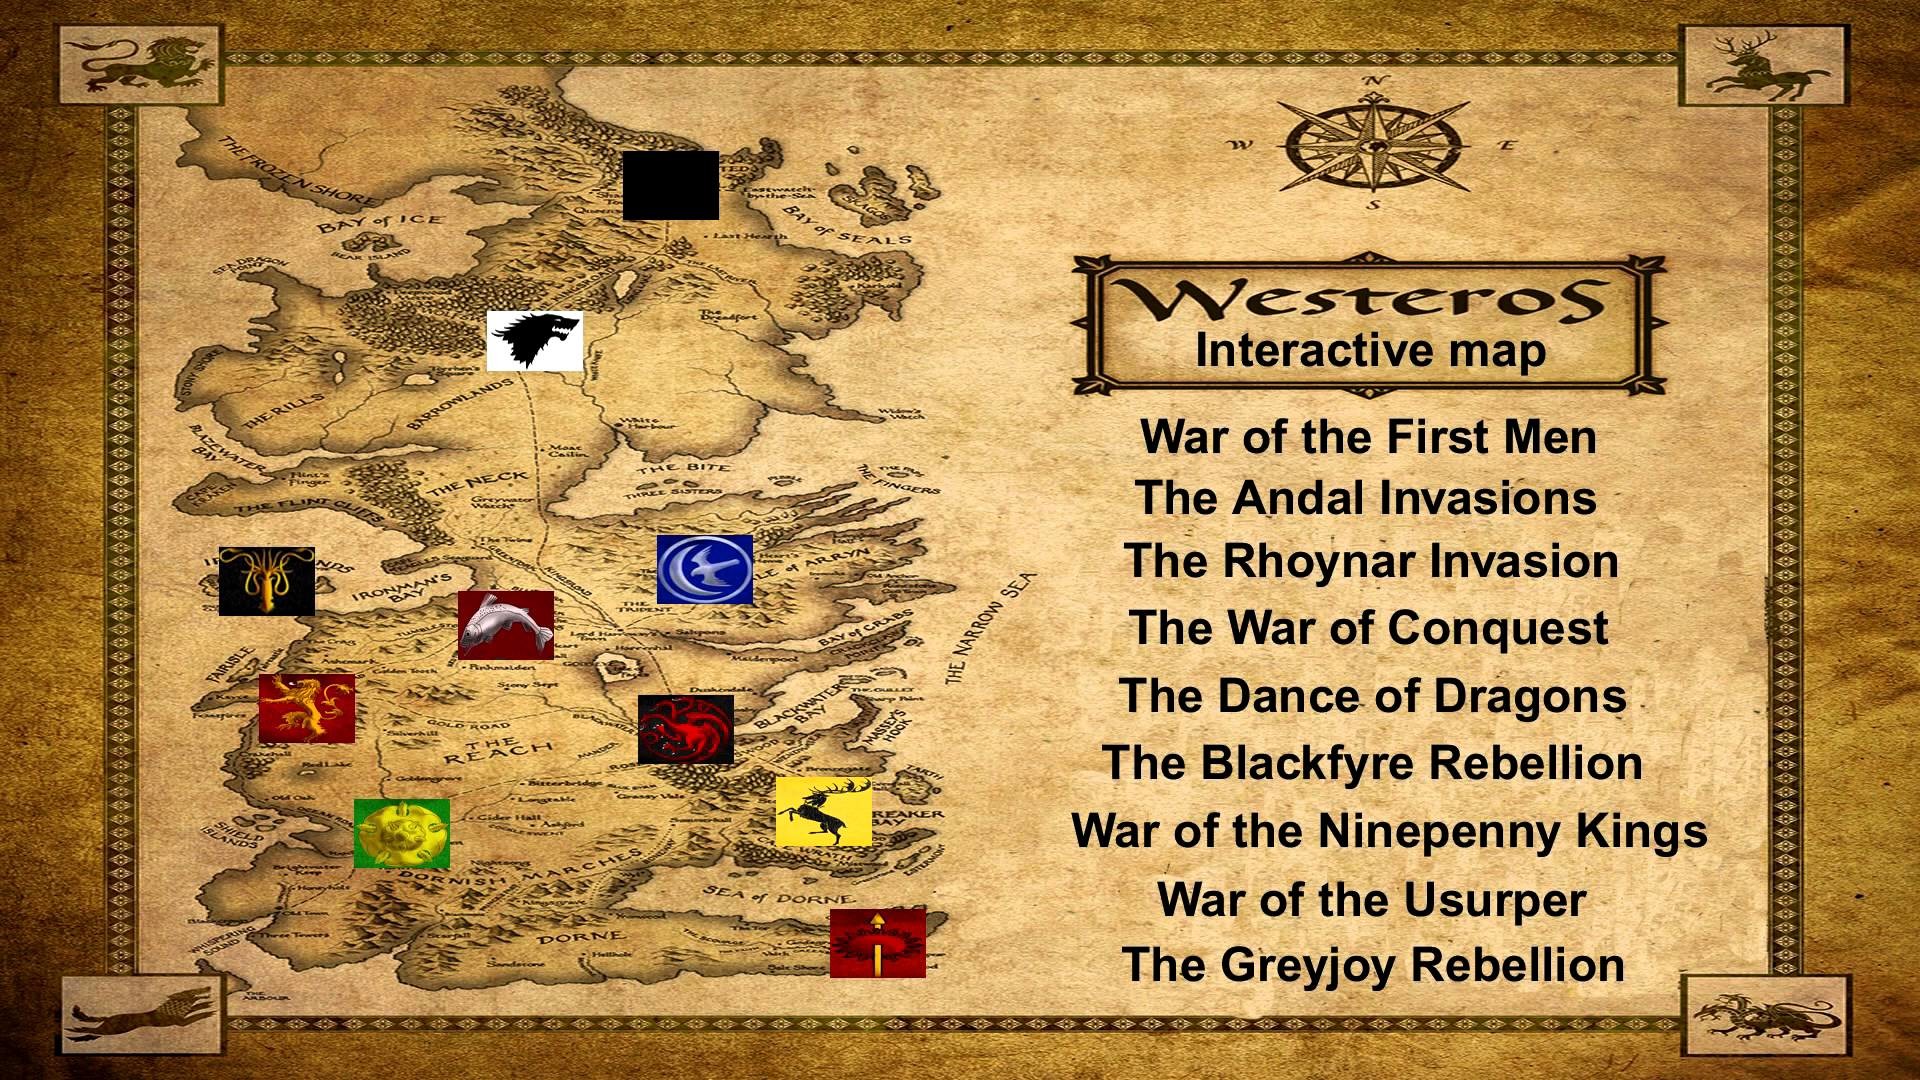 Westeros Lore Interactive Map